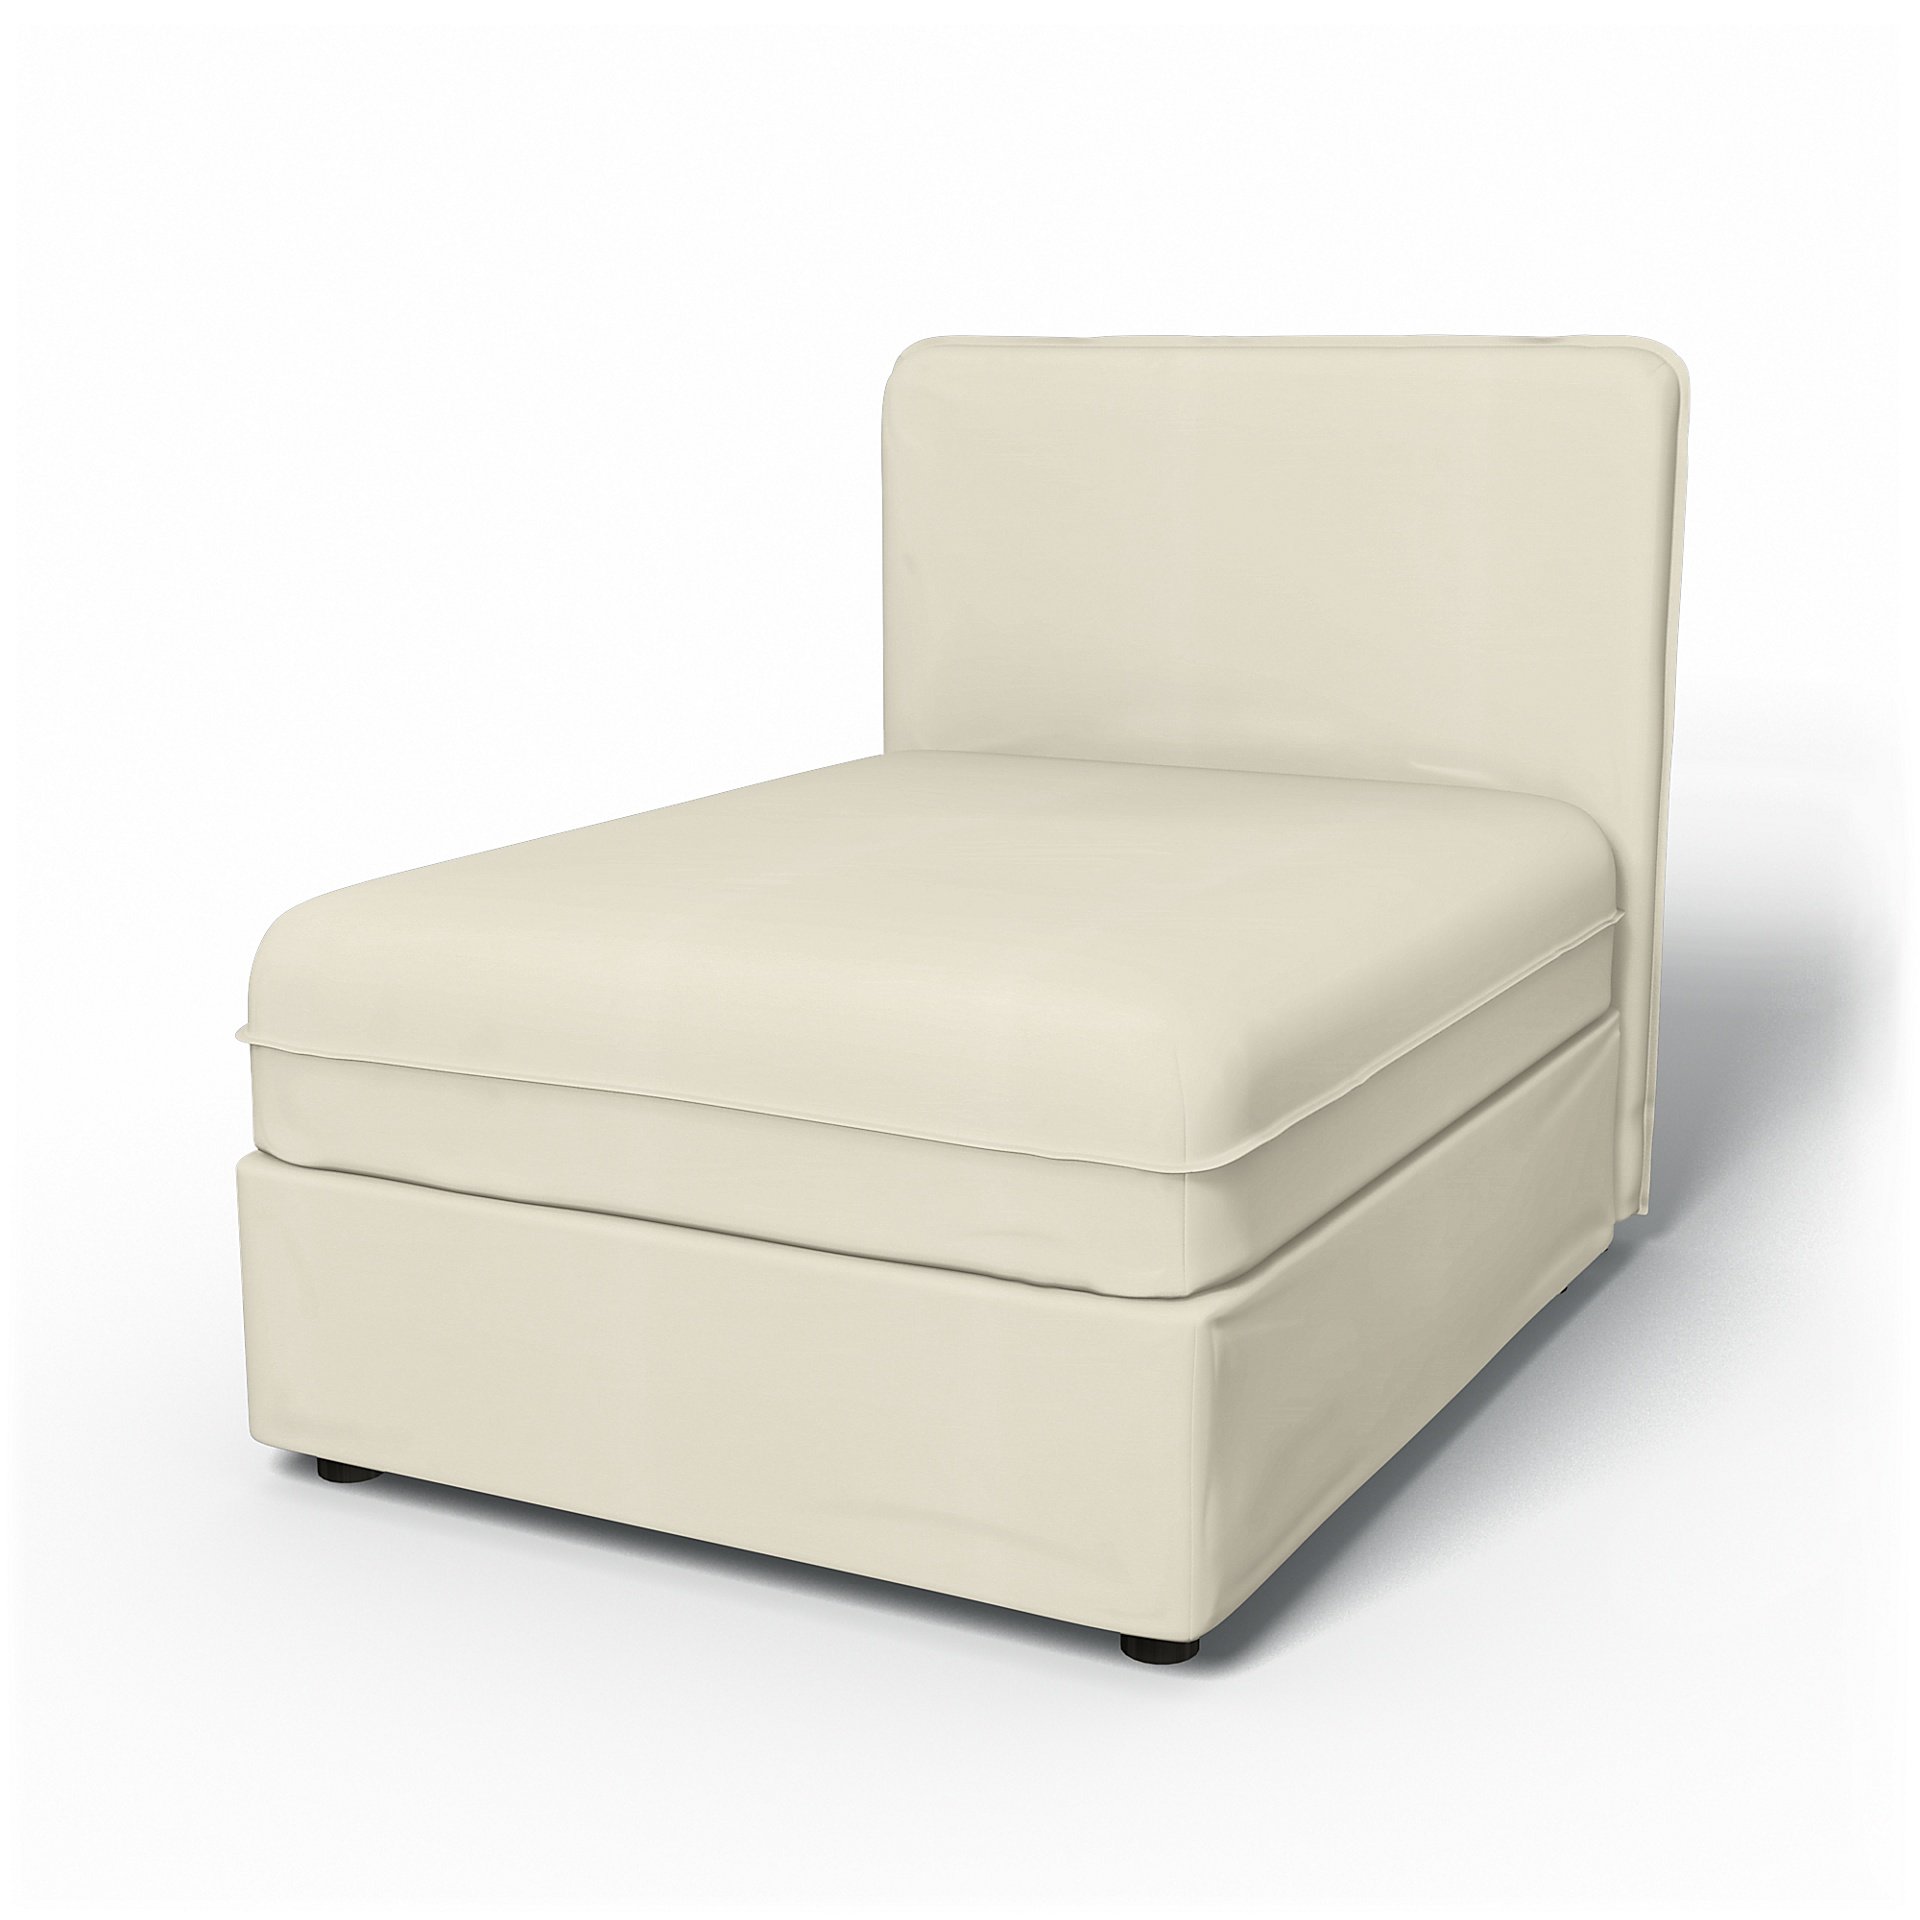 IKEA - Vallentuna Seat Module with Low Back Cover 80x100cm 32x39in, Tofu, Cotton - Bemz